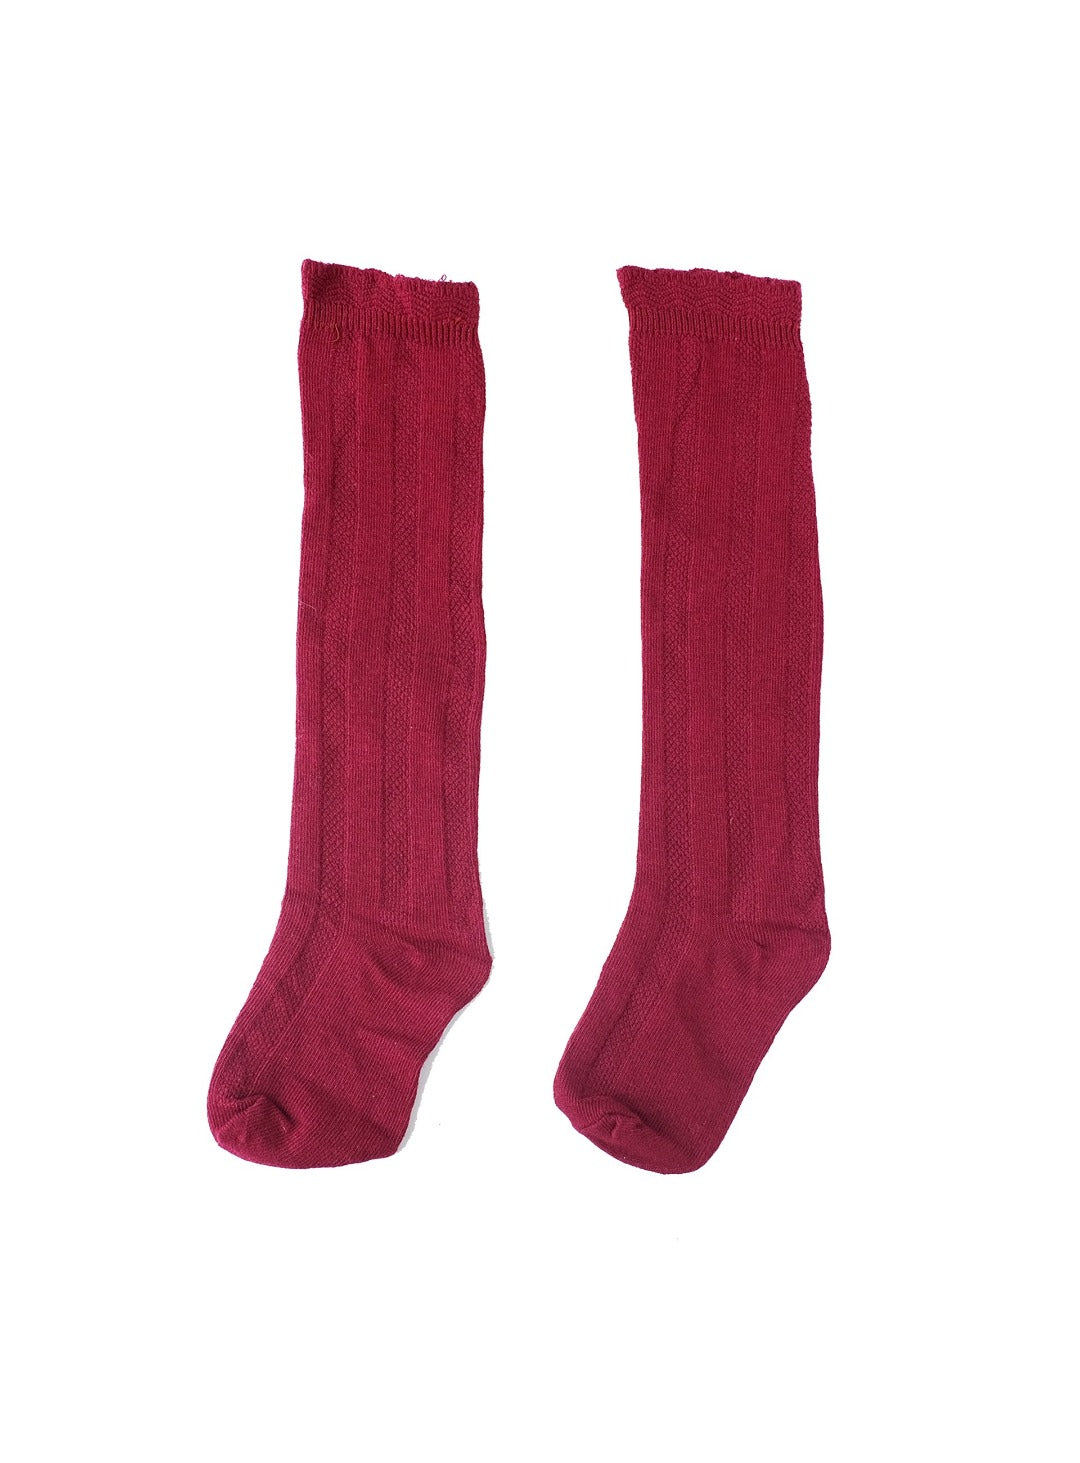 midi length red cherry socks